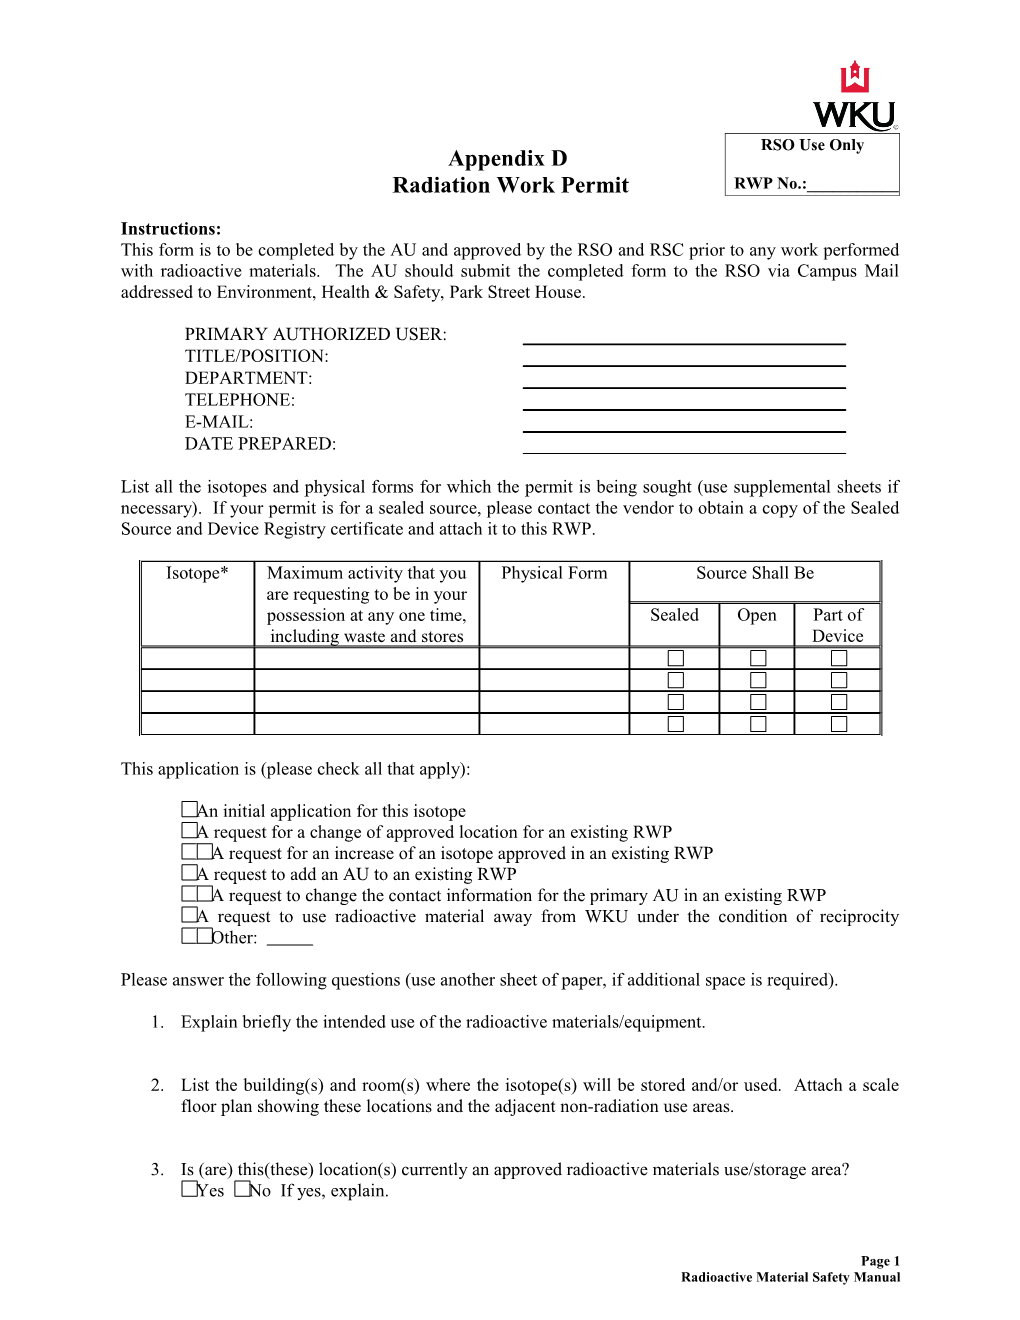 Appendix D Radiation Work Permit Instructions